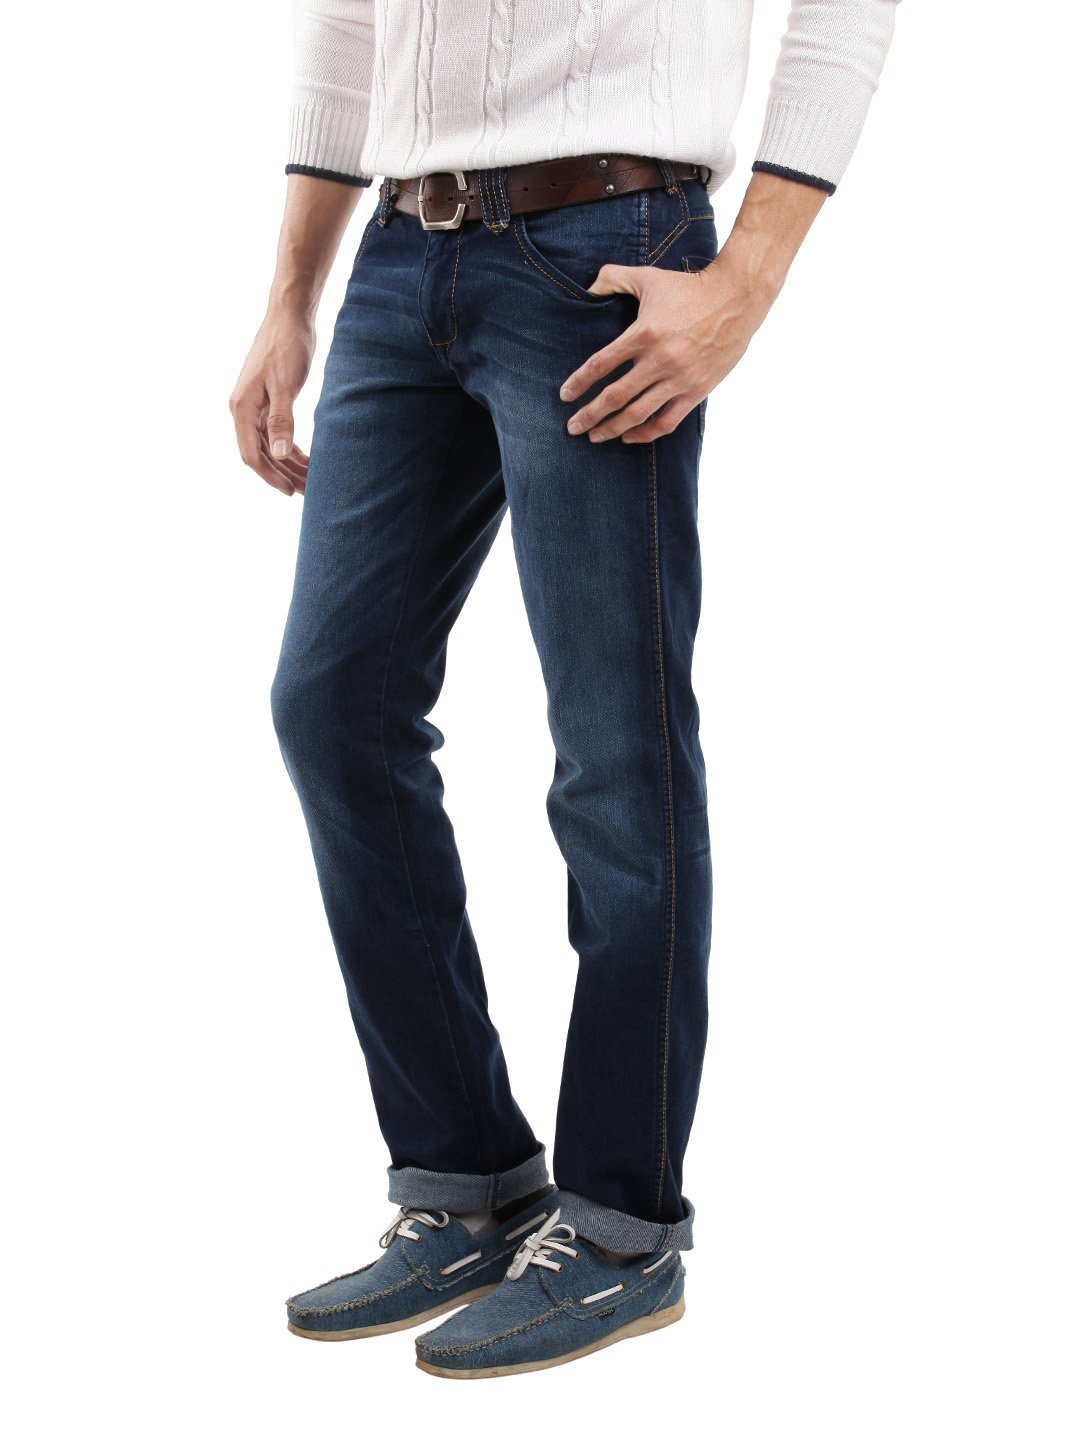 Pick That Ideal Blue Jeans - sinems wardrobe